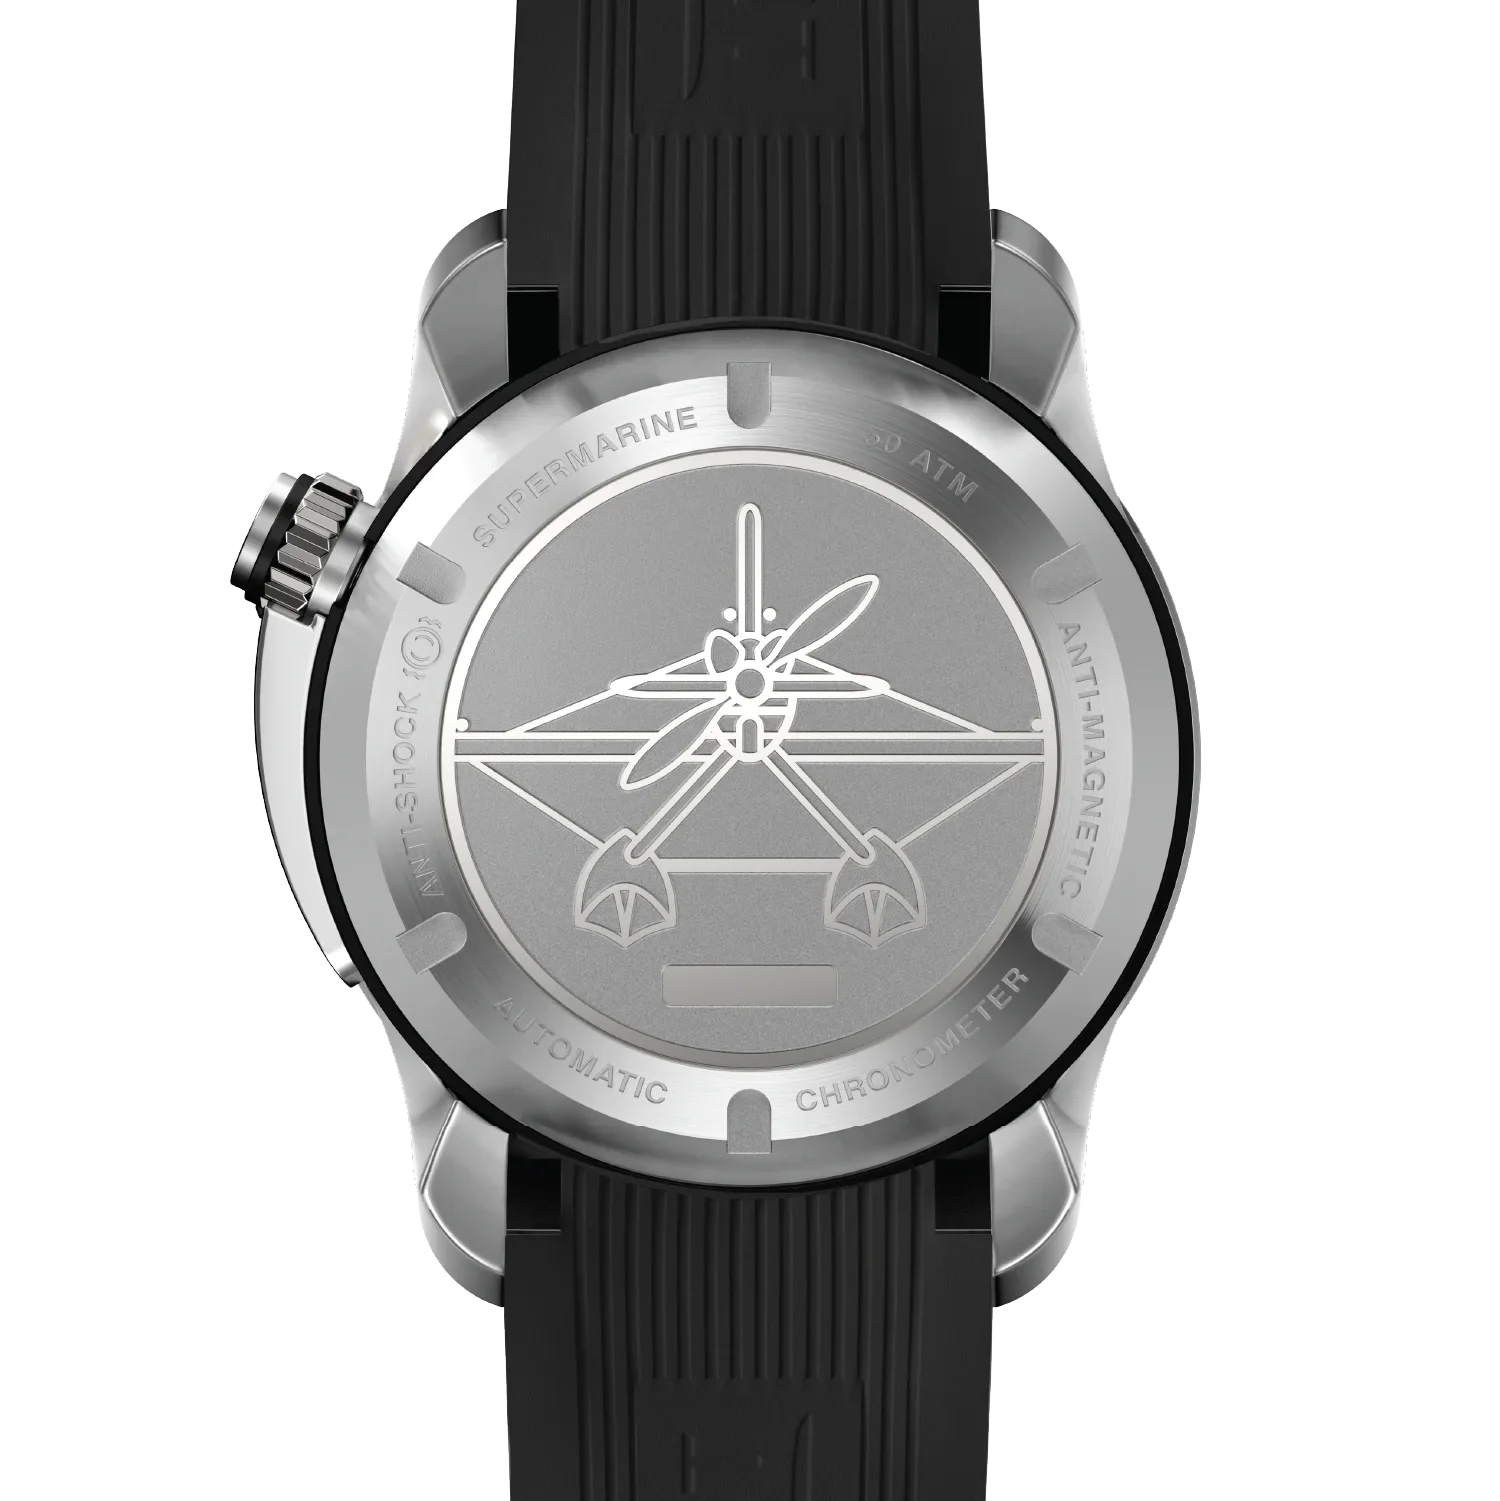 Bremont Watch Company Watches | Mens | Supermarine Waterman Apex II [Black Rubber]